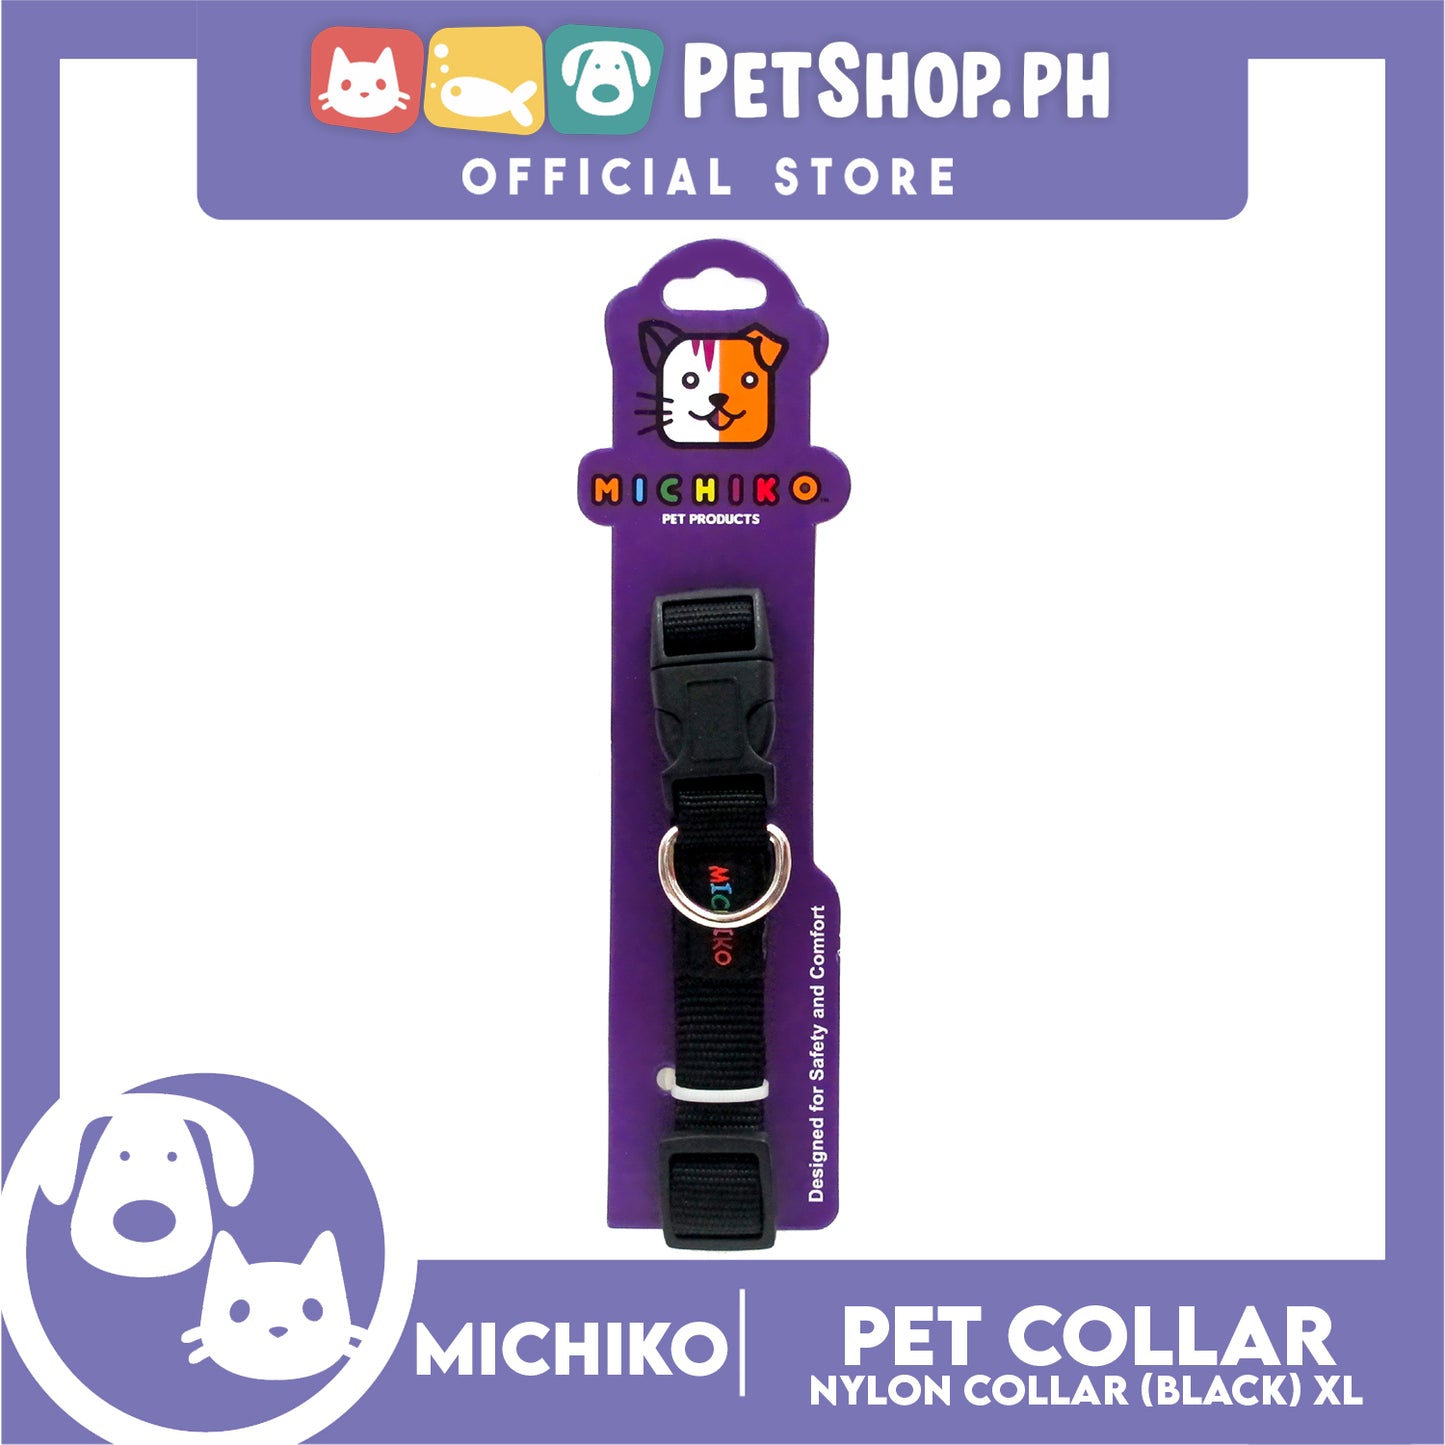 Michiko Nylon Collar Black (Extra Large) Pet Collar